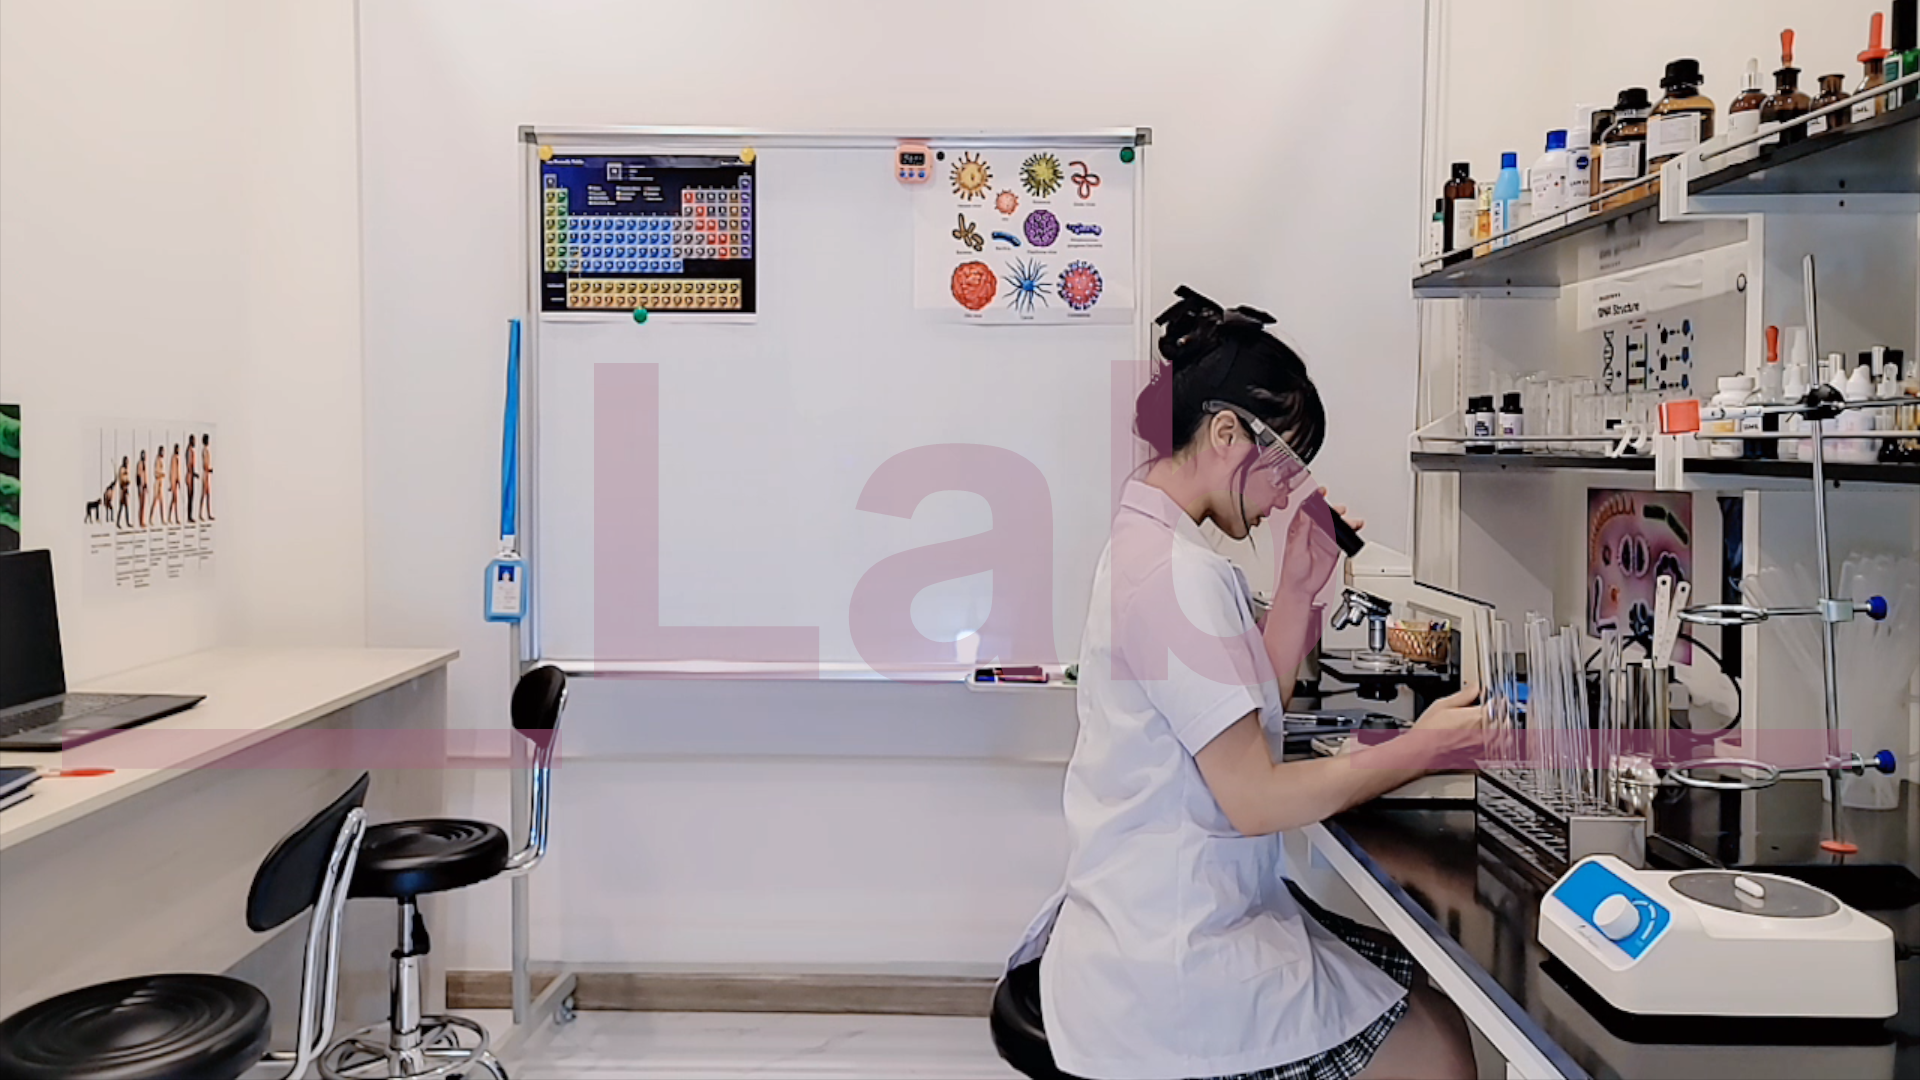 __lab__ videos